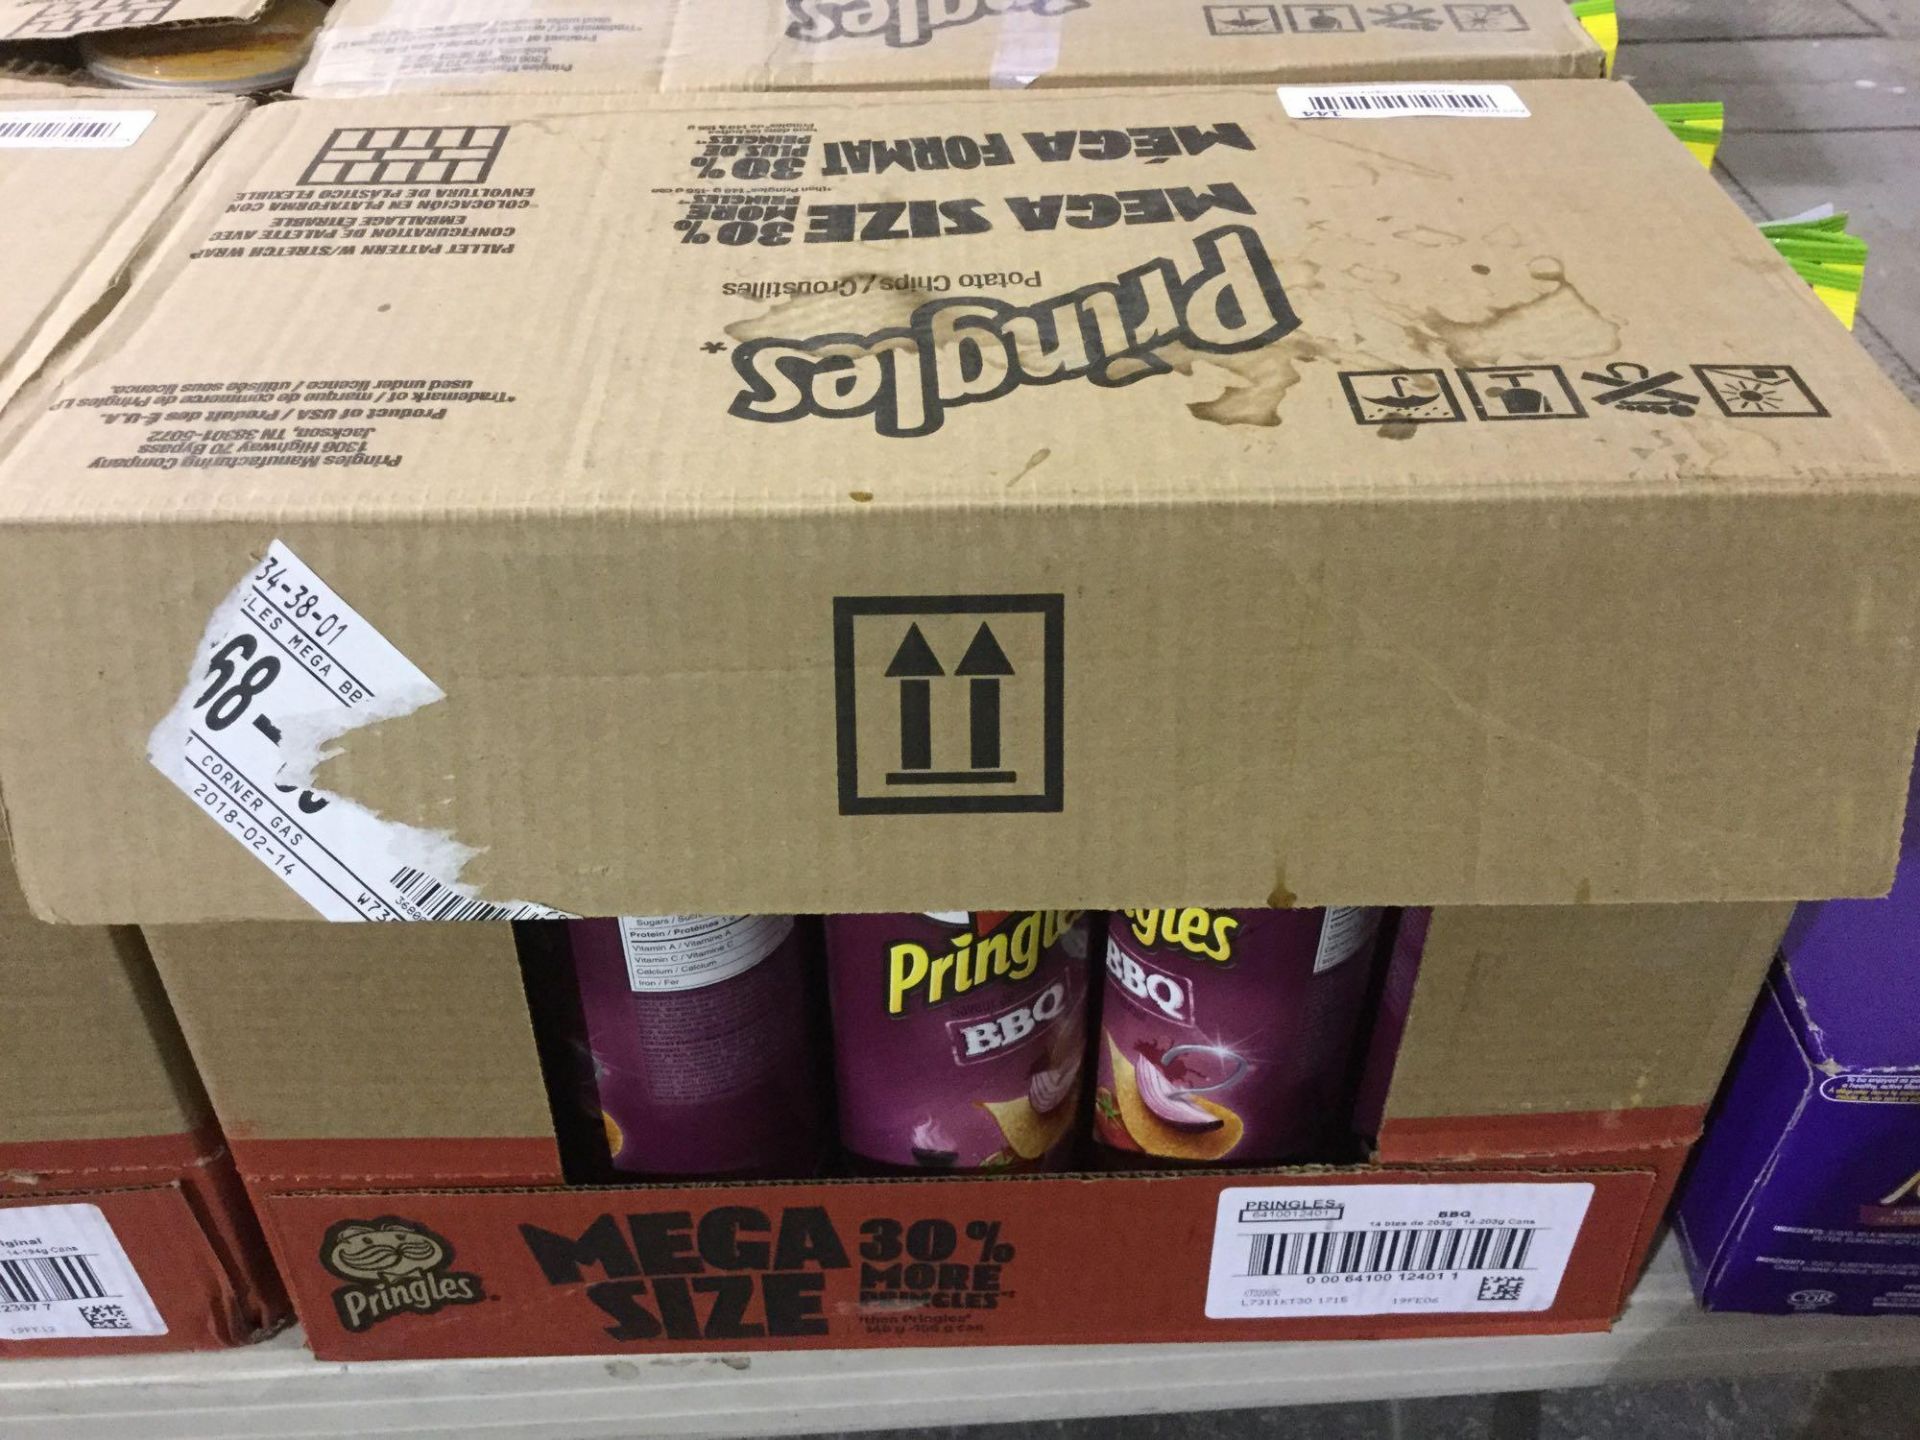 Case of 14 x 203 g Pringles Mega Cans - BBQ